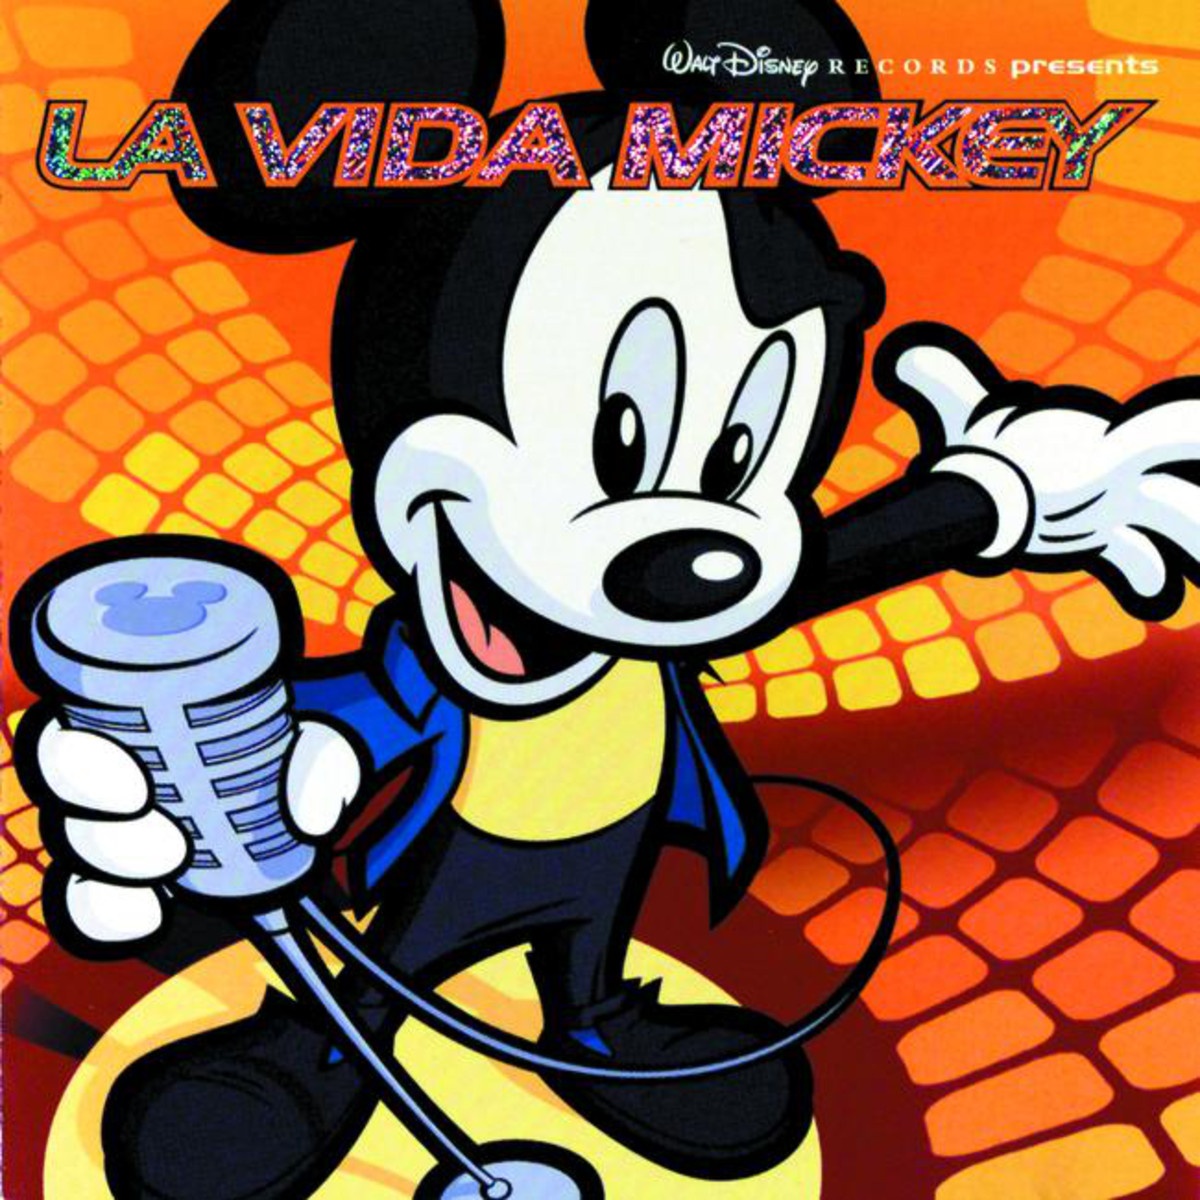 Disney Mambo #5 (A Little Bit of ...) by Lou Bega